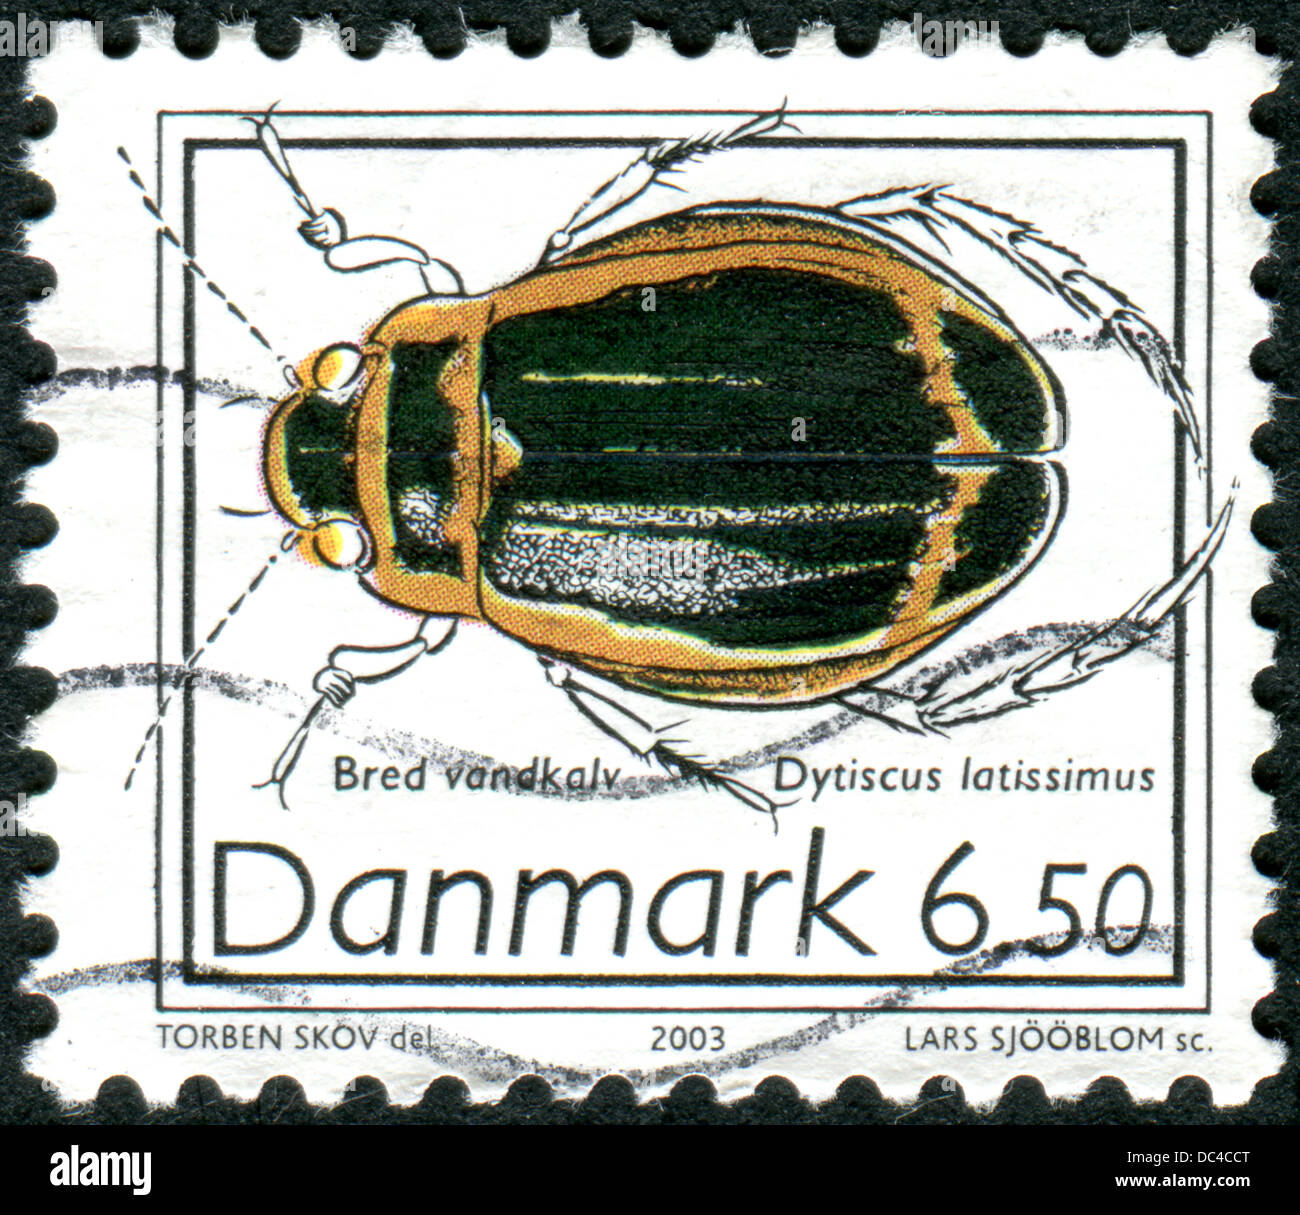 DENMARK - CIRCA 2003: Postage stamp printed in Denmark, shows beetle Dytiscus latissimus, circa 2003 Stock Photo